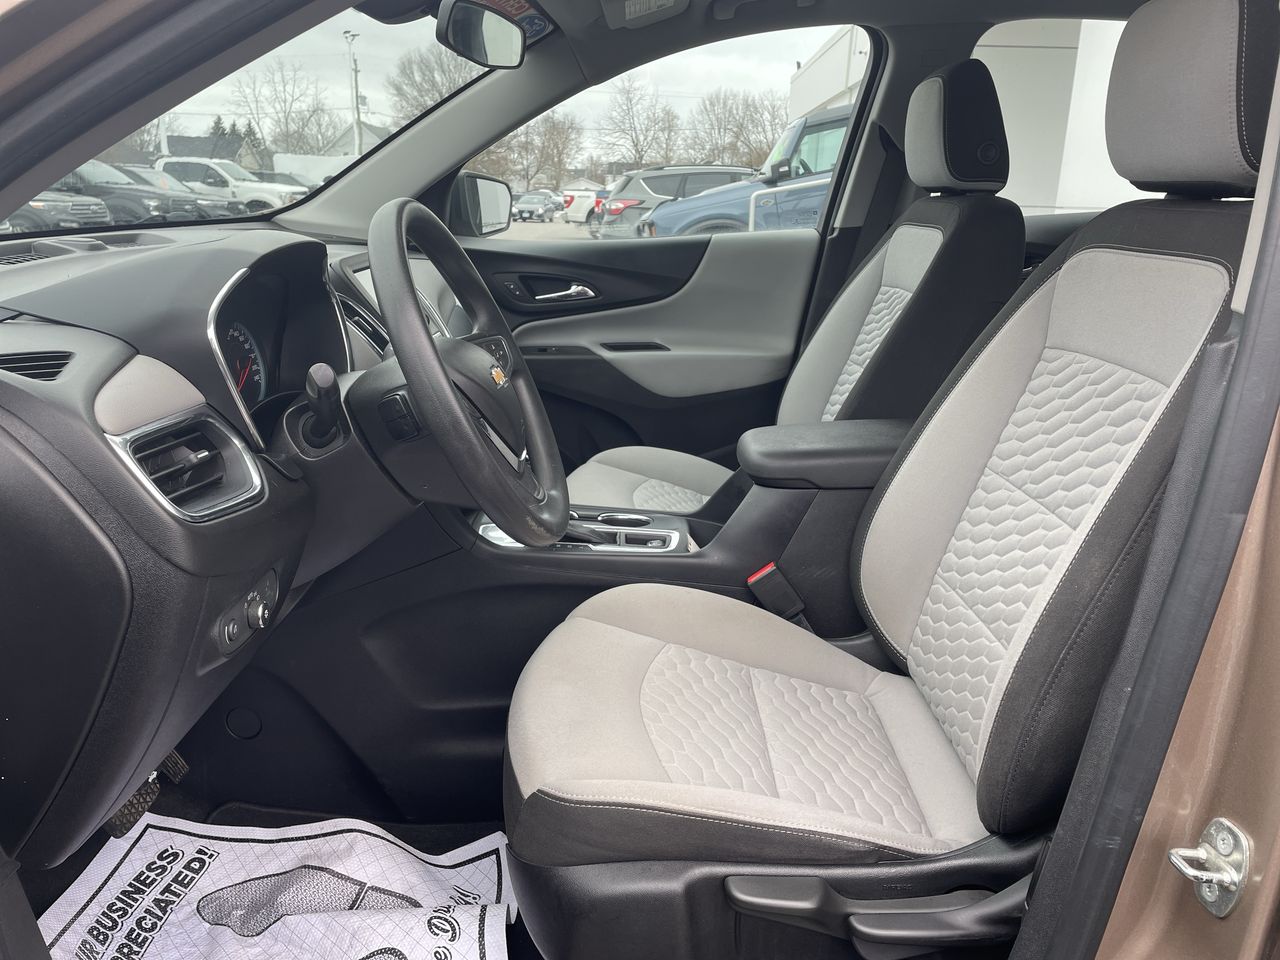 2018 Chevrolet Equinox - P21032 Full Image 11